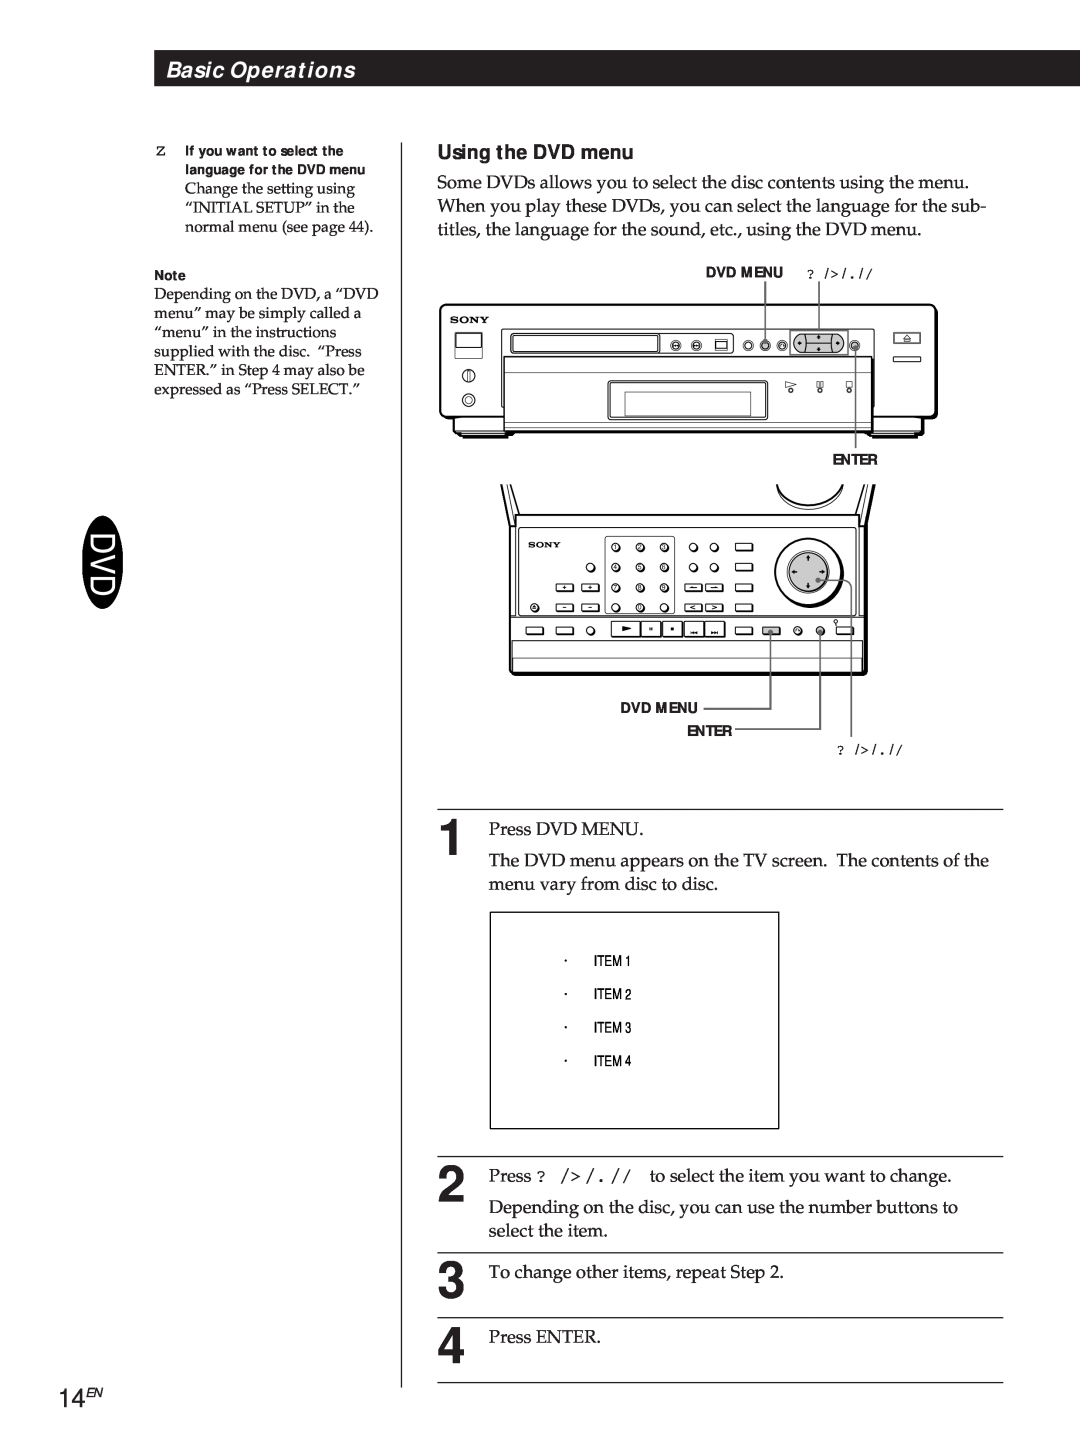 Sony DVP3980 manual 14EN, Basic Operations, Using the DVD menu 